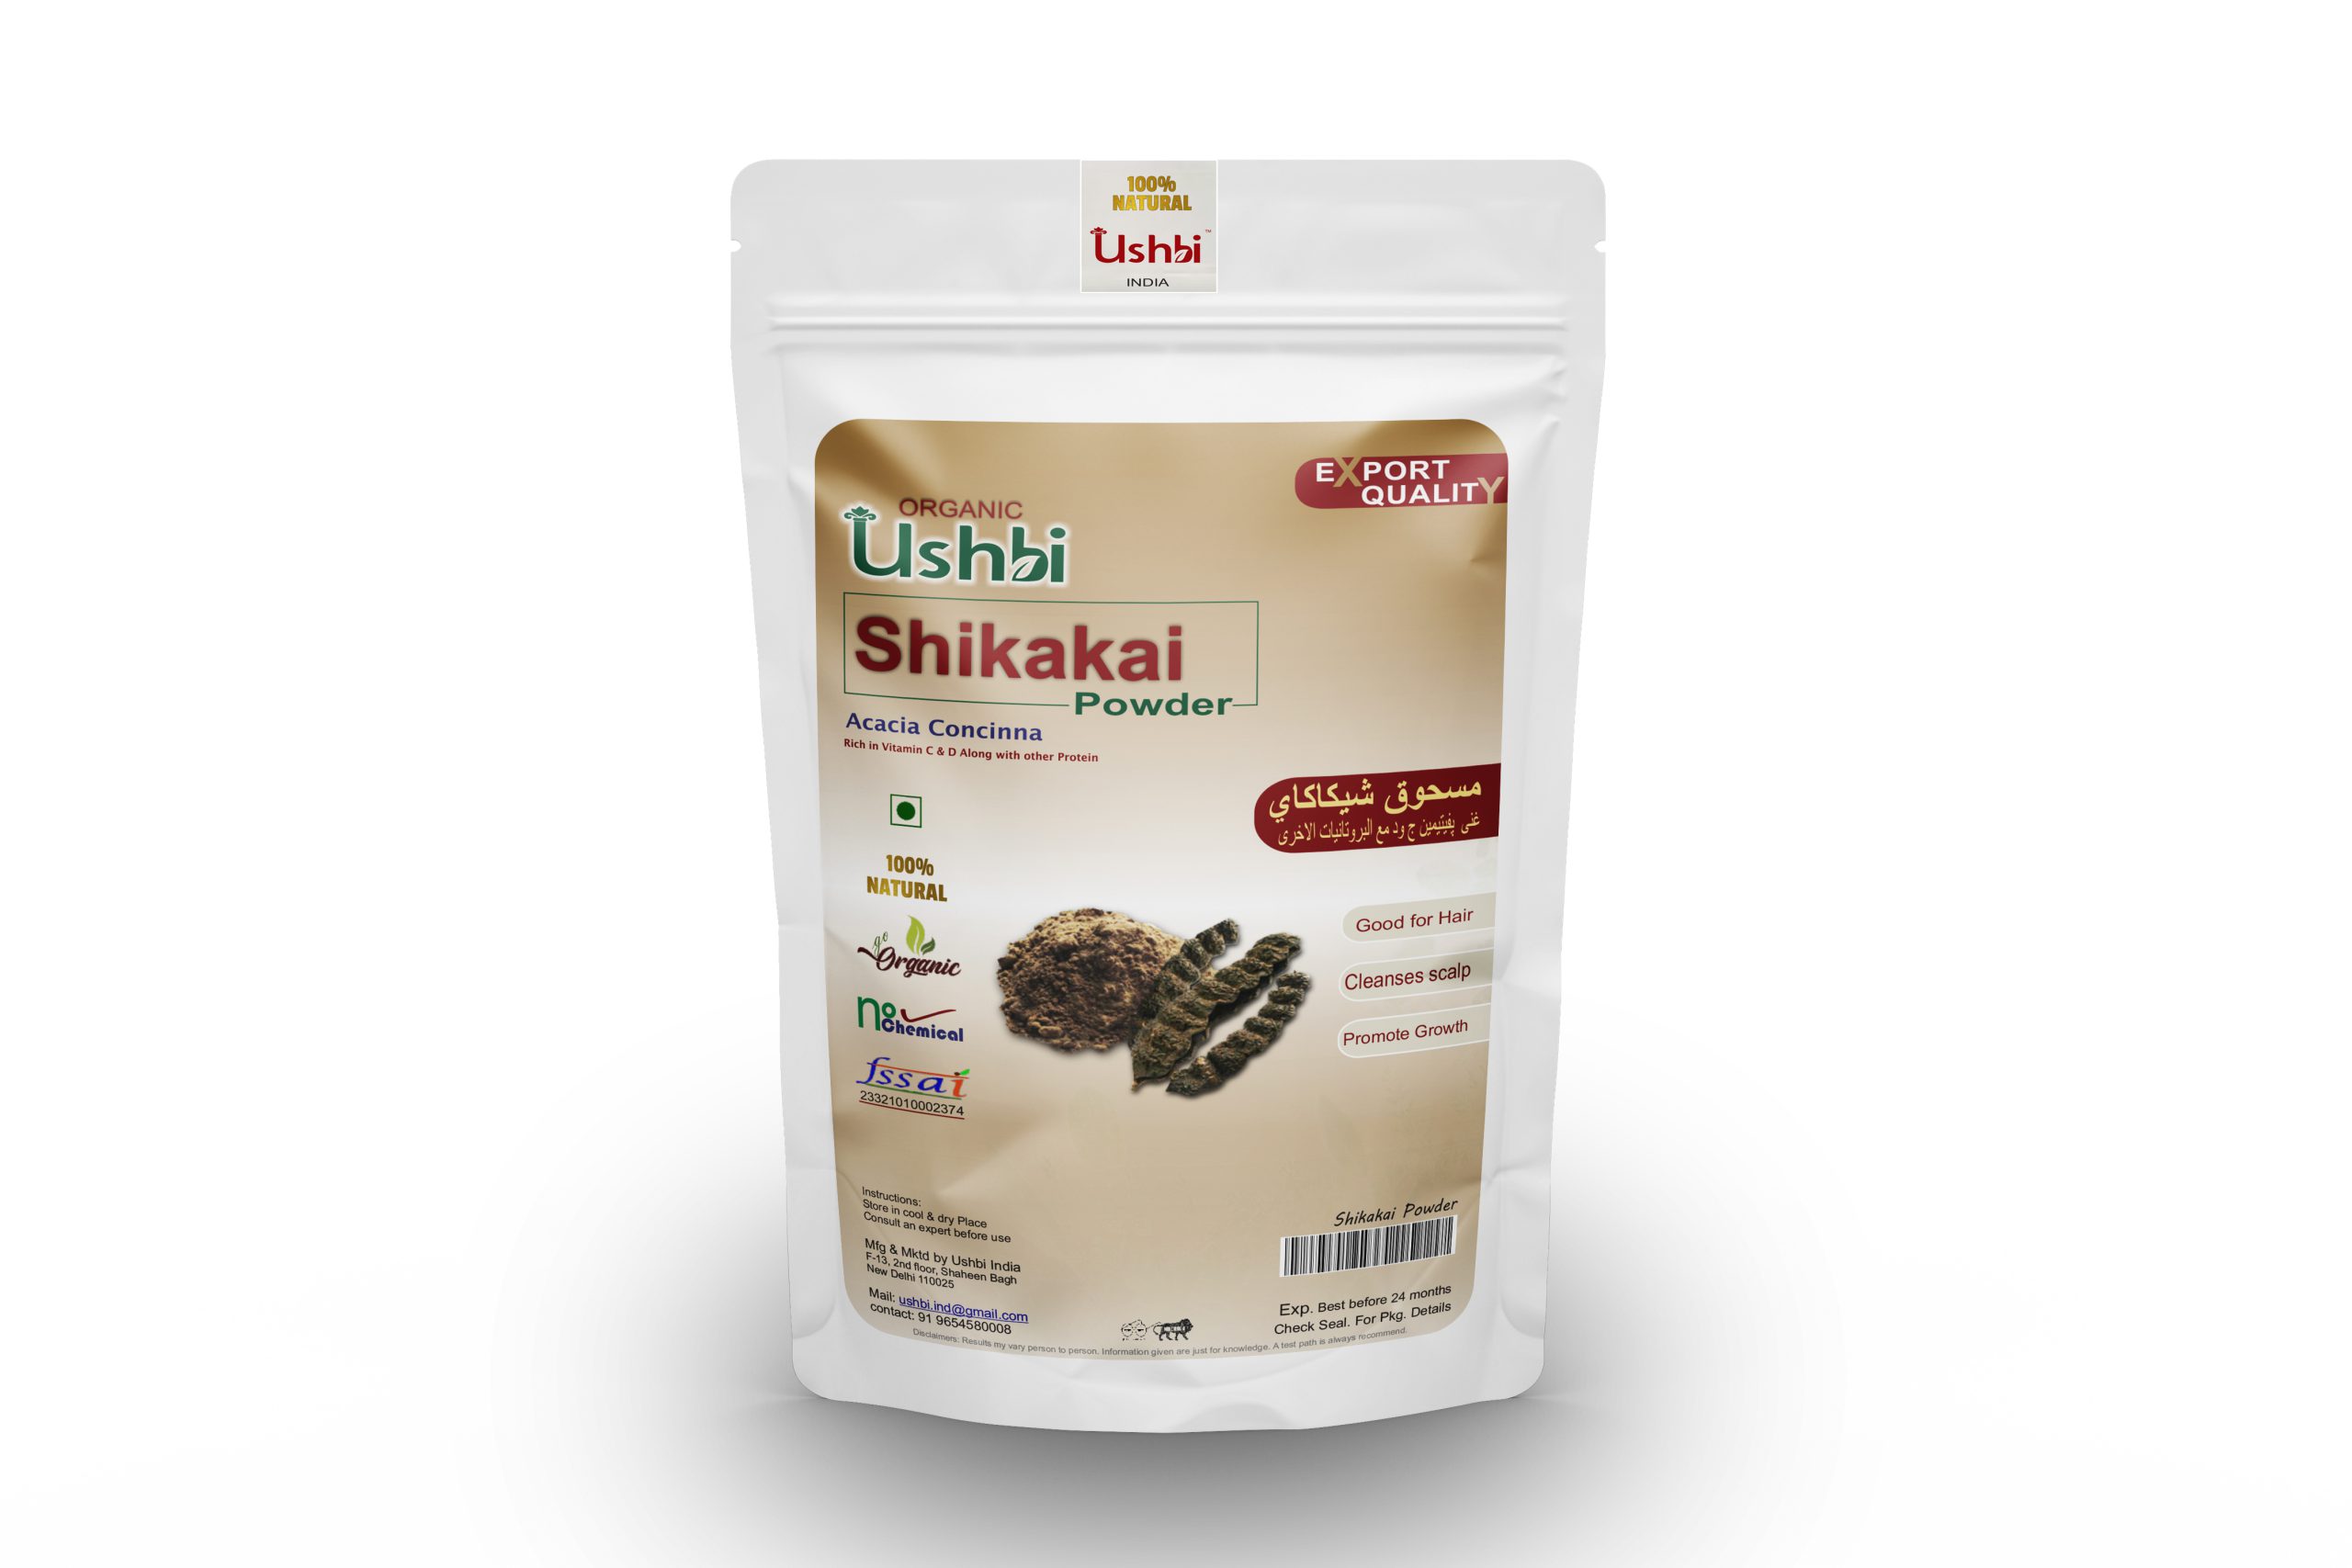 USHBI 100% Natural Organic Shikakai Powder